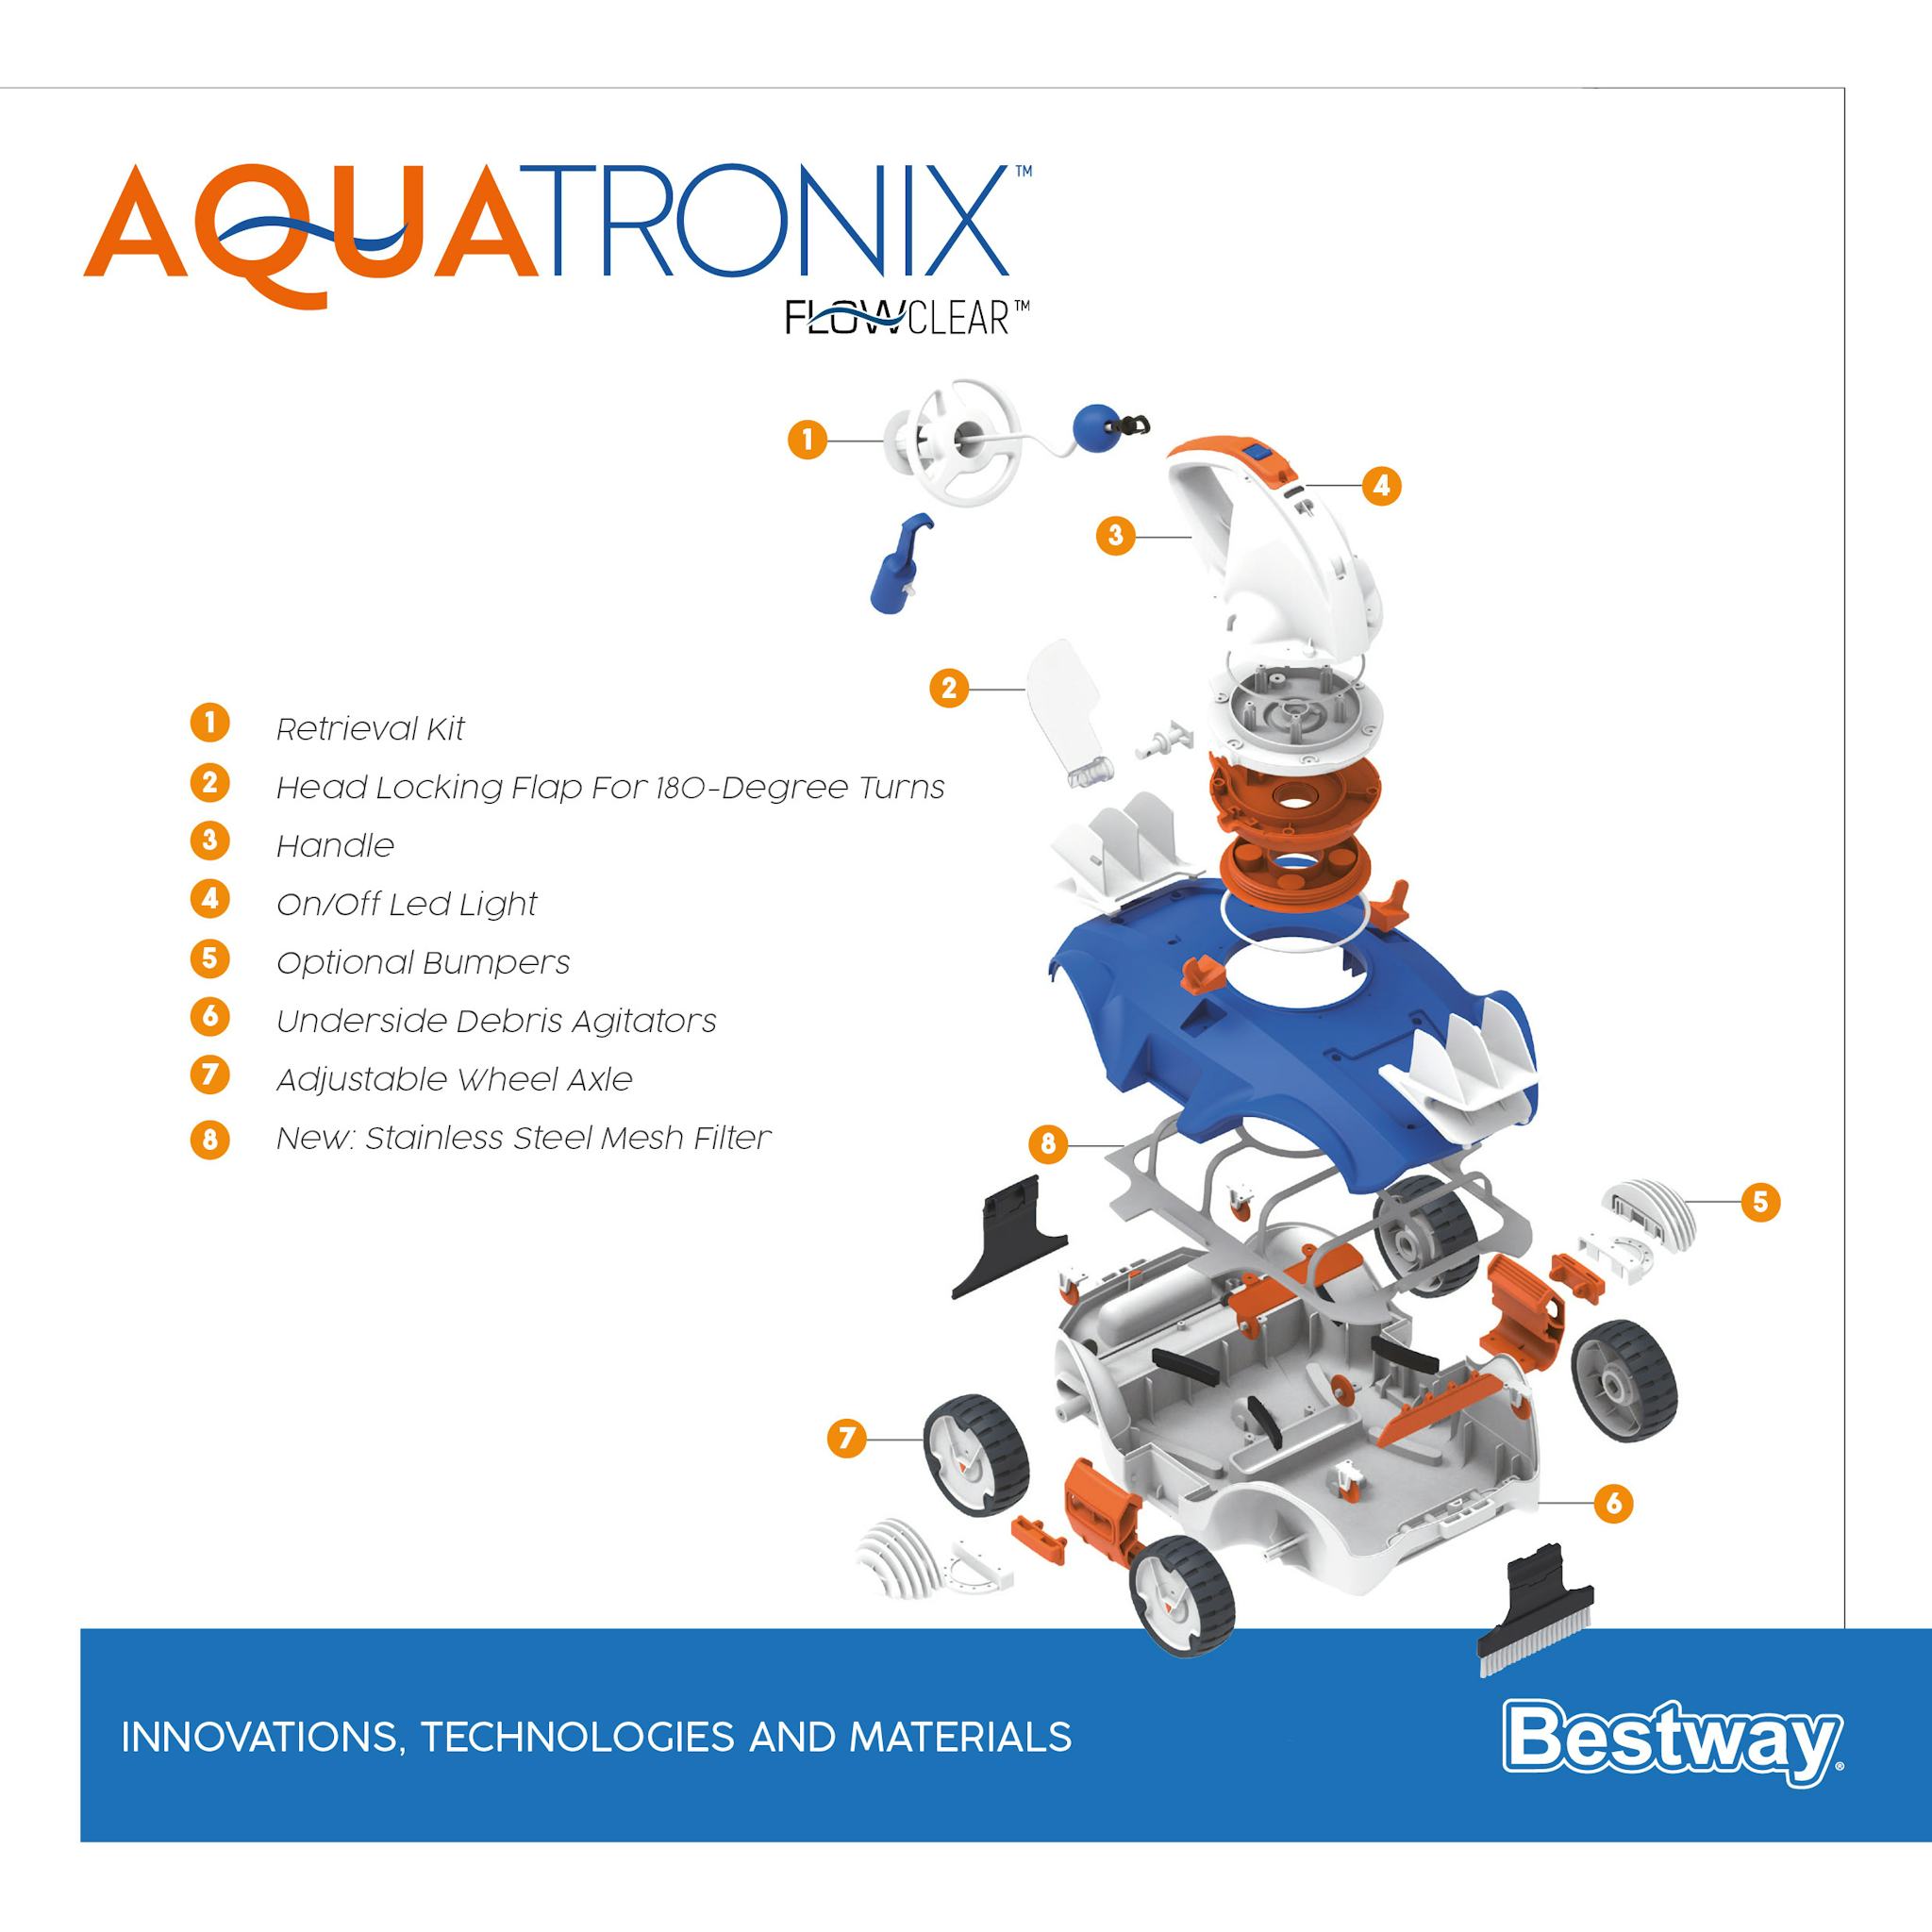 Accessori Piscine e Spa Robot per la pulizia della piscina Aquatronix Bestway 9